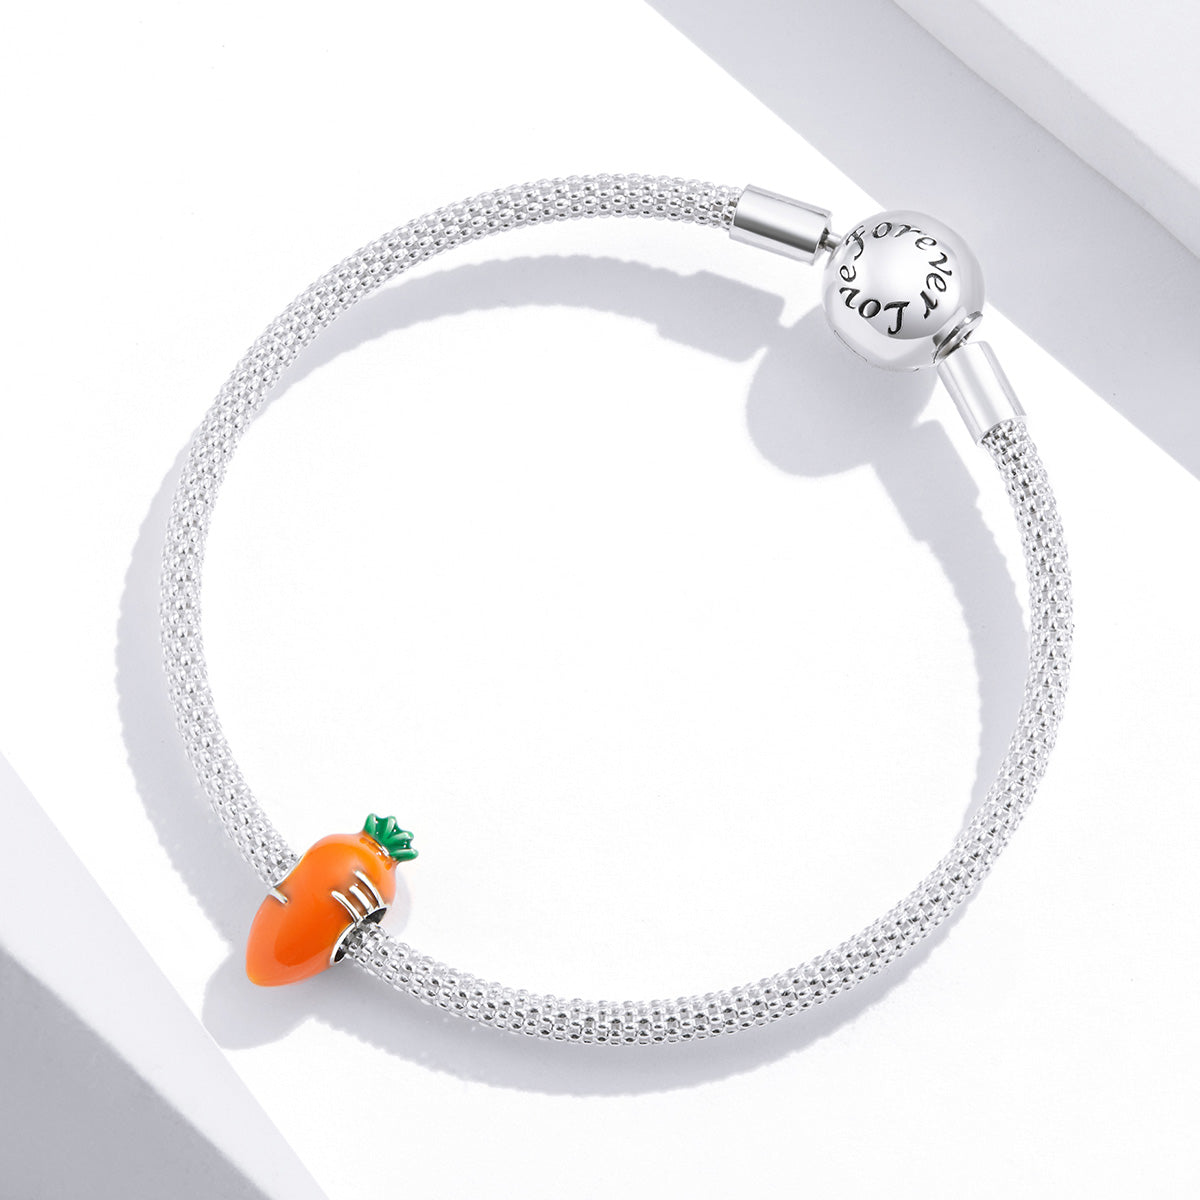 Sterling 925 silver charm the carrot bead pendant fits Pandora charm and European charm bracelet Xaxe.com